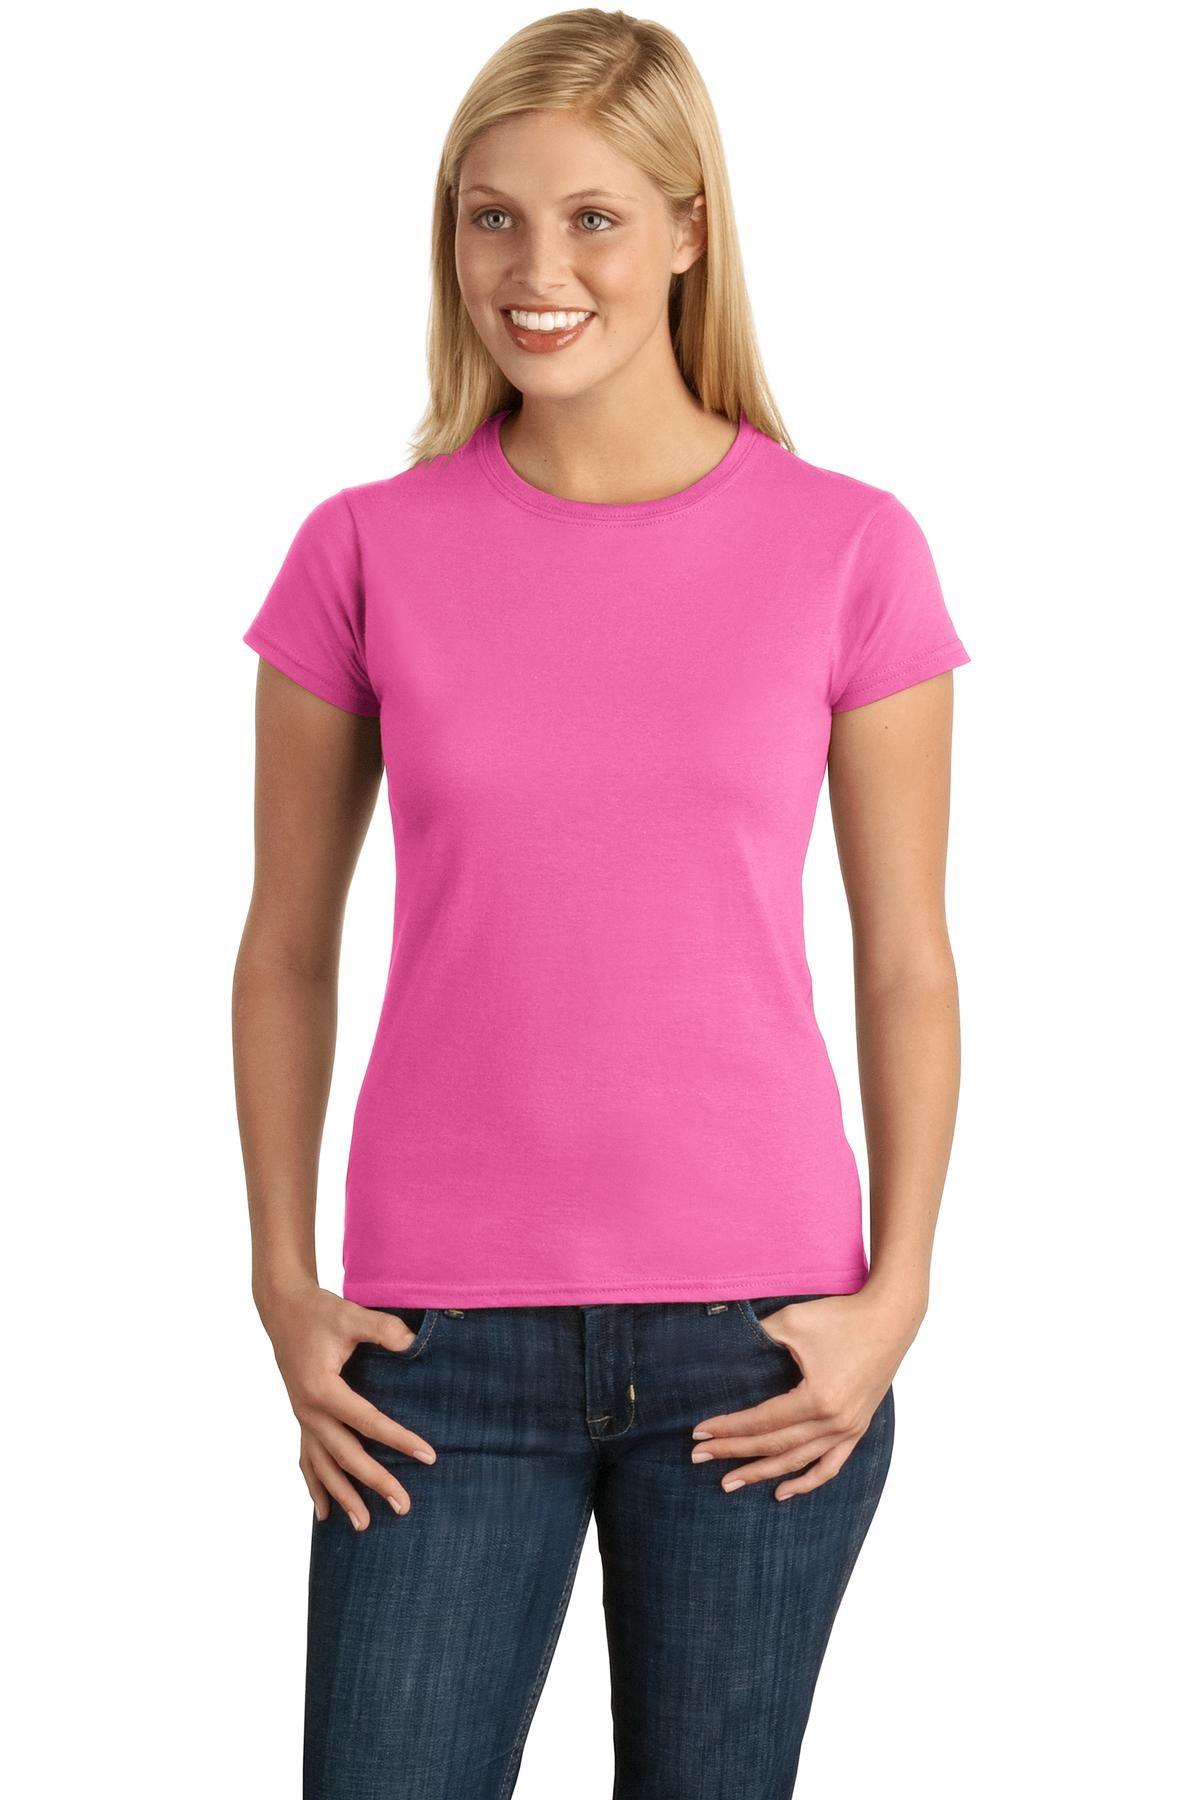 Gildan Softstyle Ladies T-Shirt. 64000L - Dresses Max